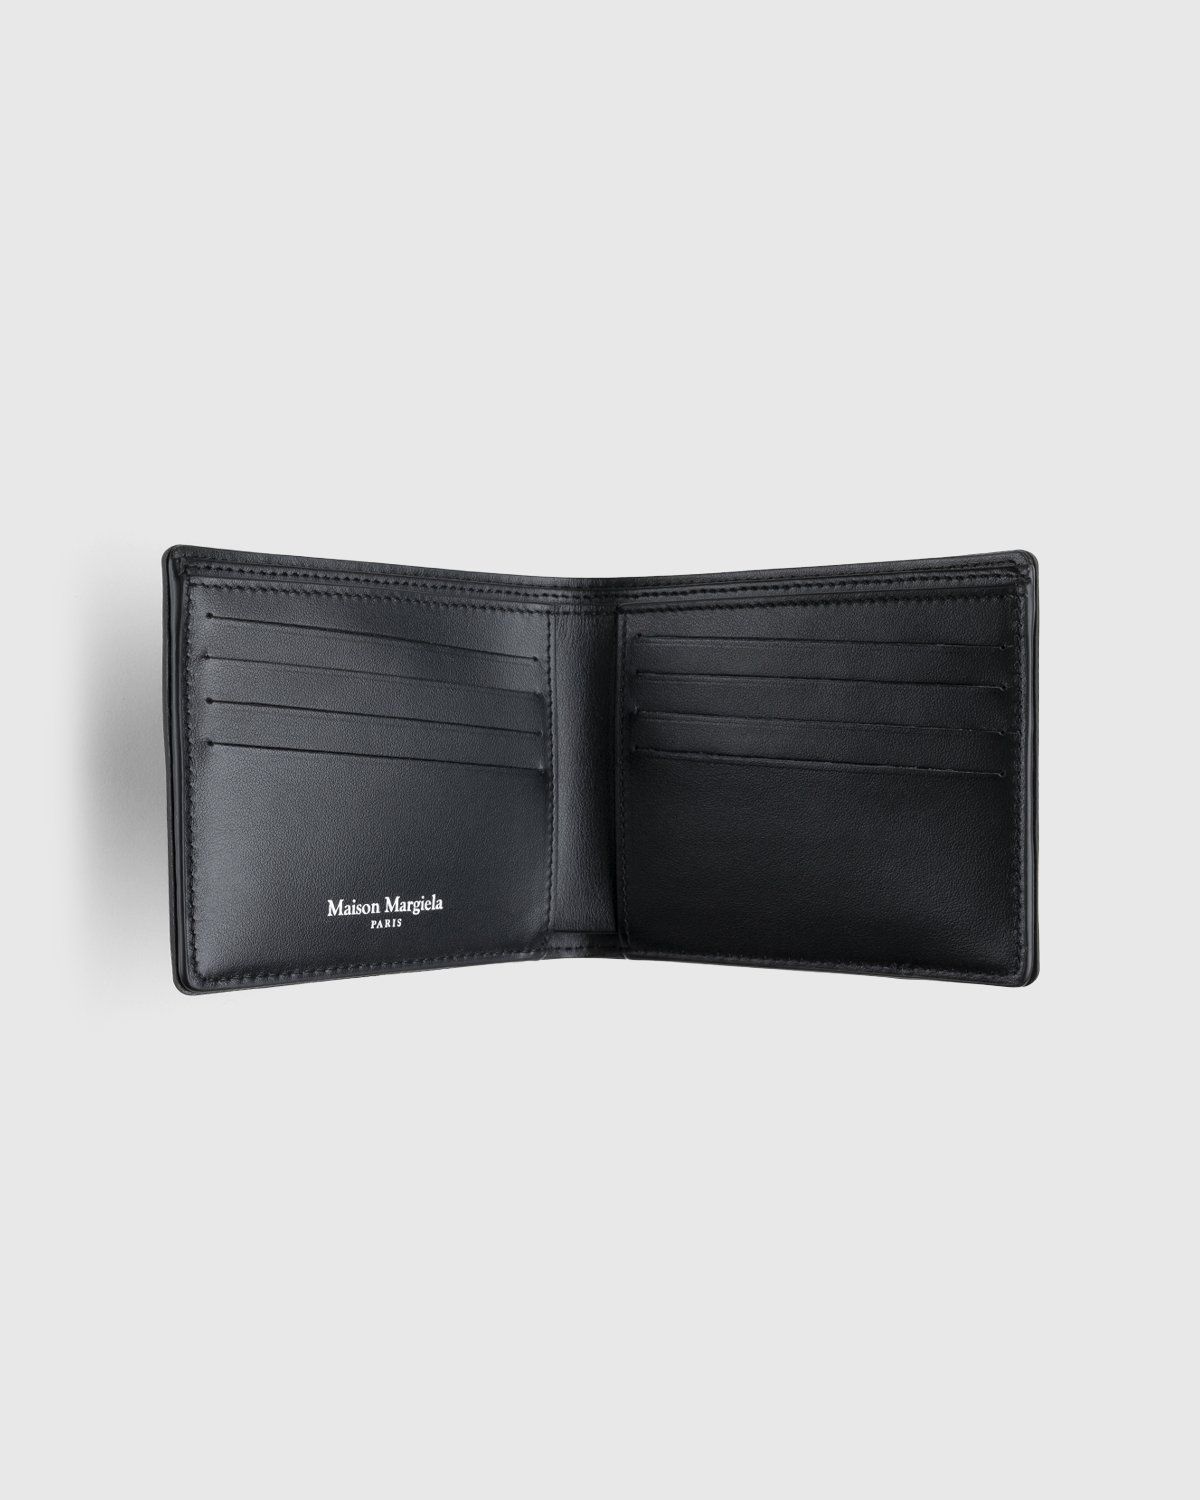 Maison Margiela – Bi-Fold Wallet Black - Image 3